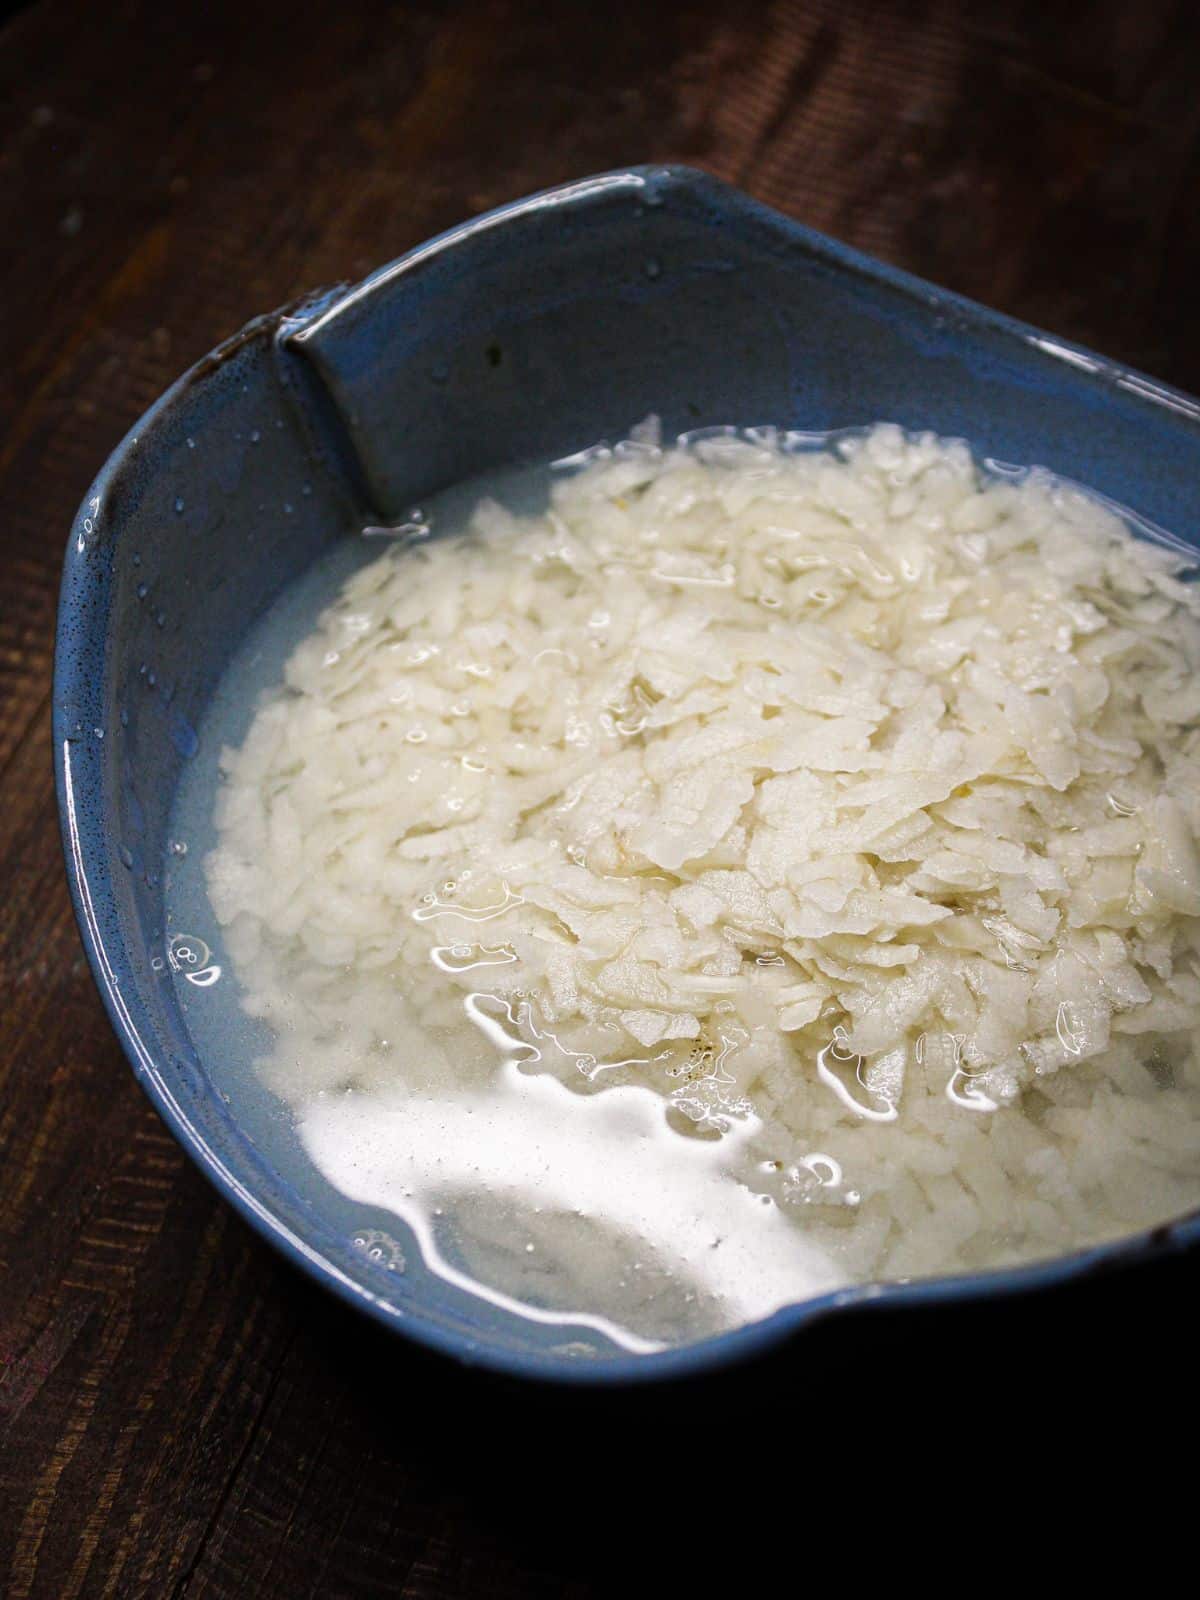 Soak flattened rice into the bowl 